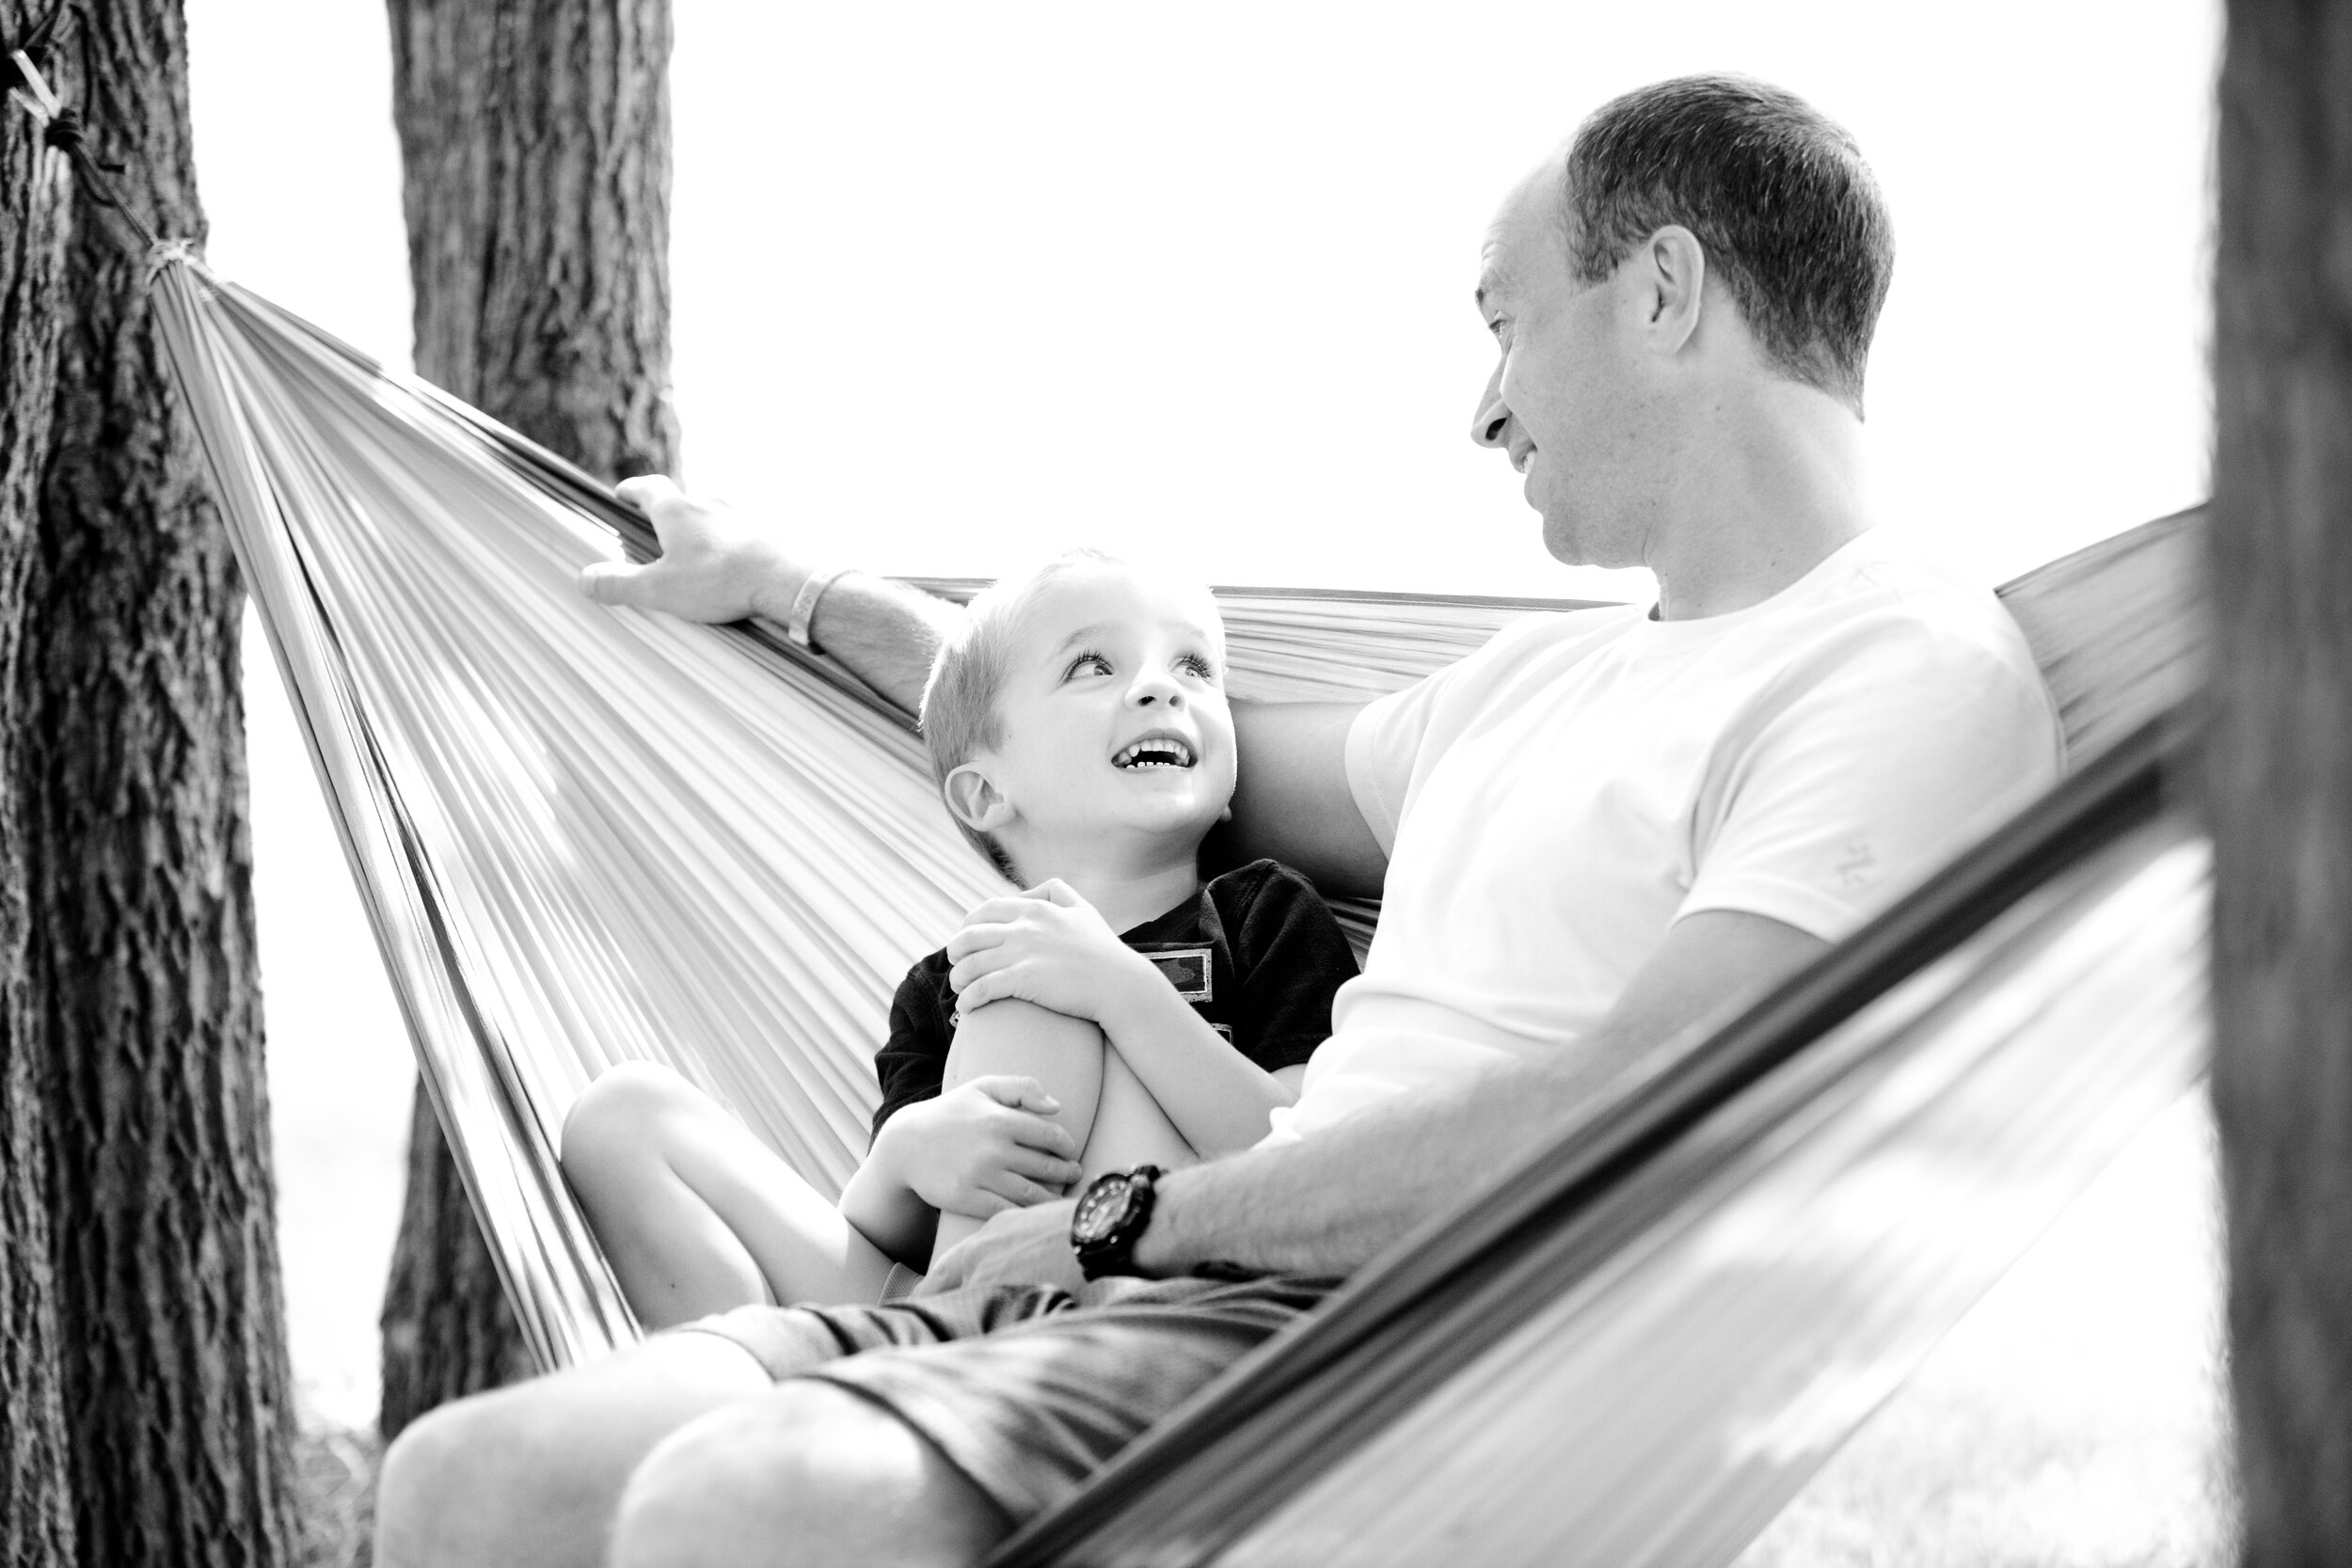 Canva - Grayscale Photo of Man and Child Sitting on Hammock.jpg